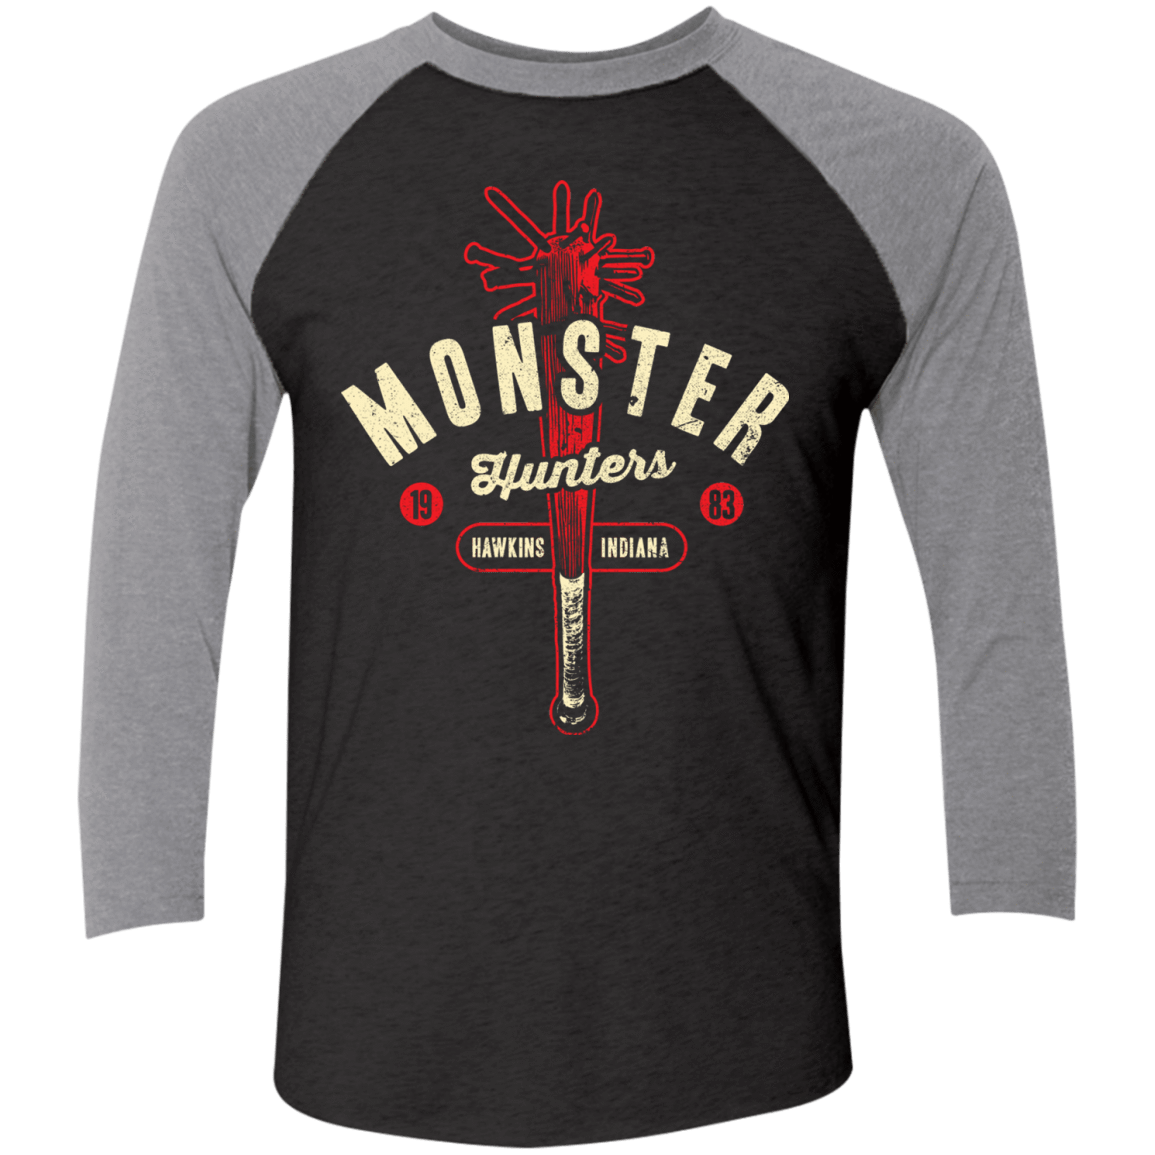 T-Shirts Vintage Black/Premium Heather / X-Small Monster Hunters 83 Men's Triblend 3/4 Sleeve